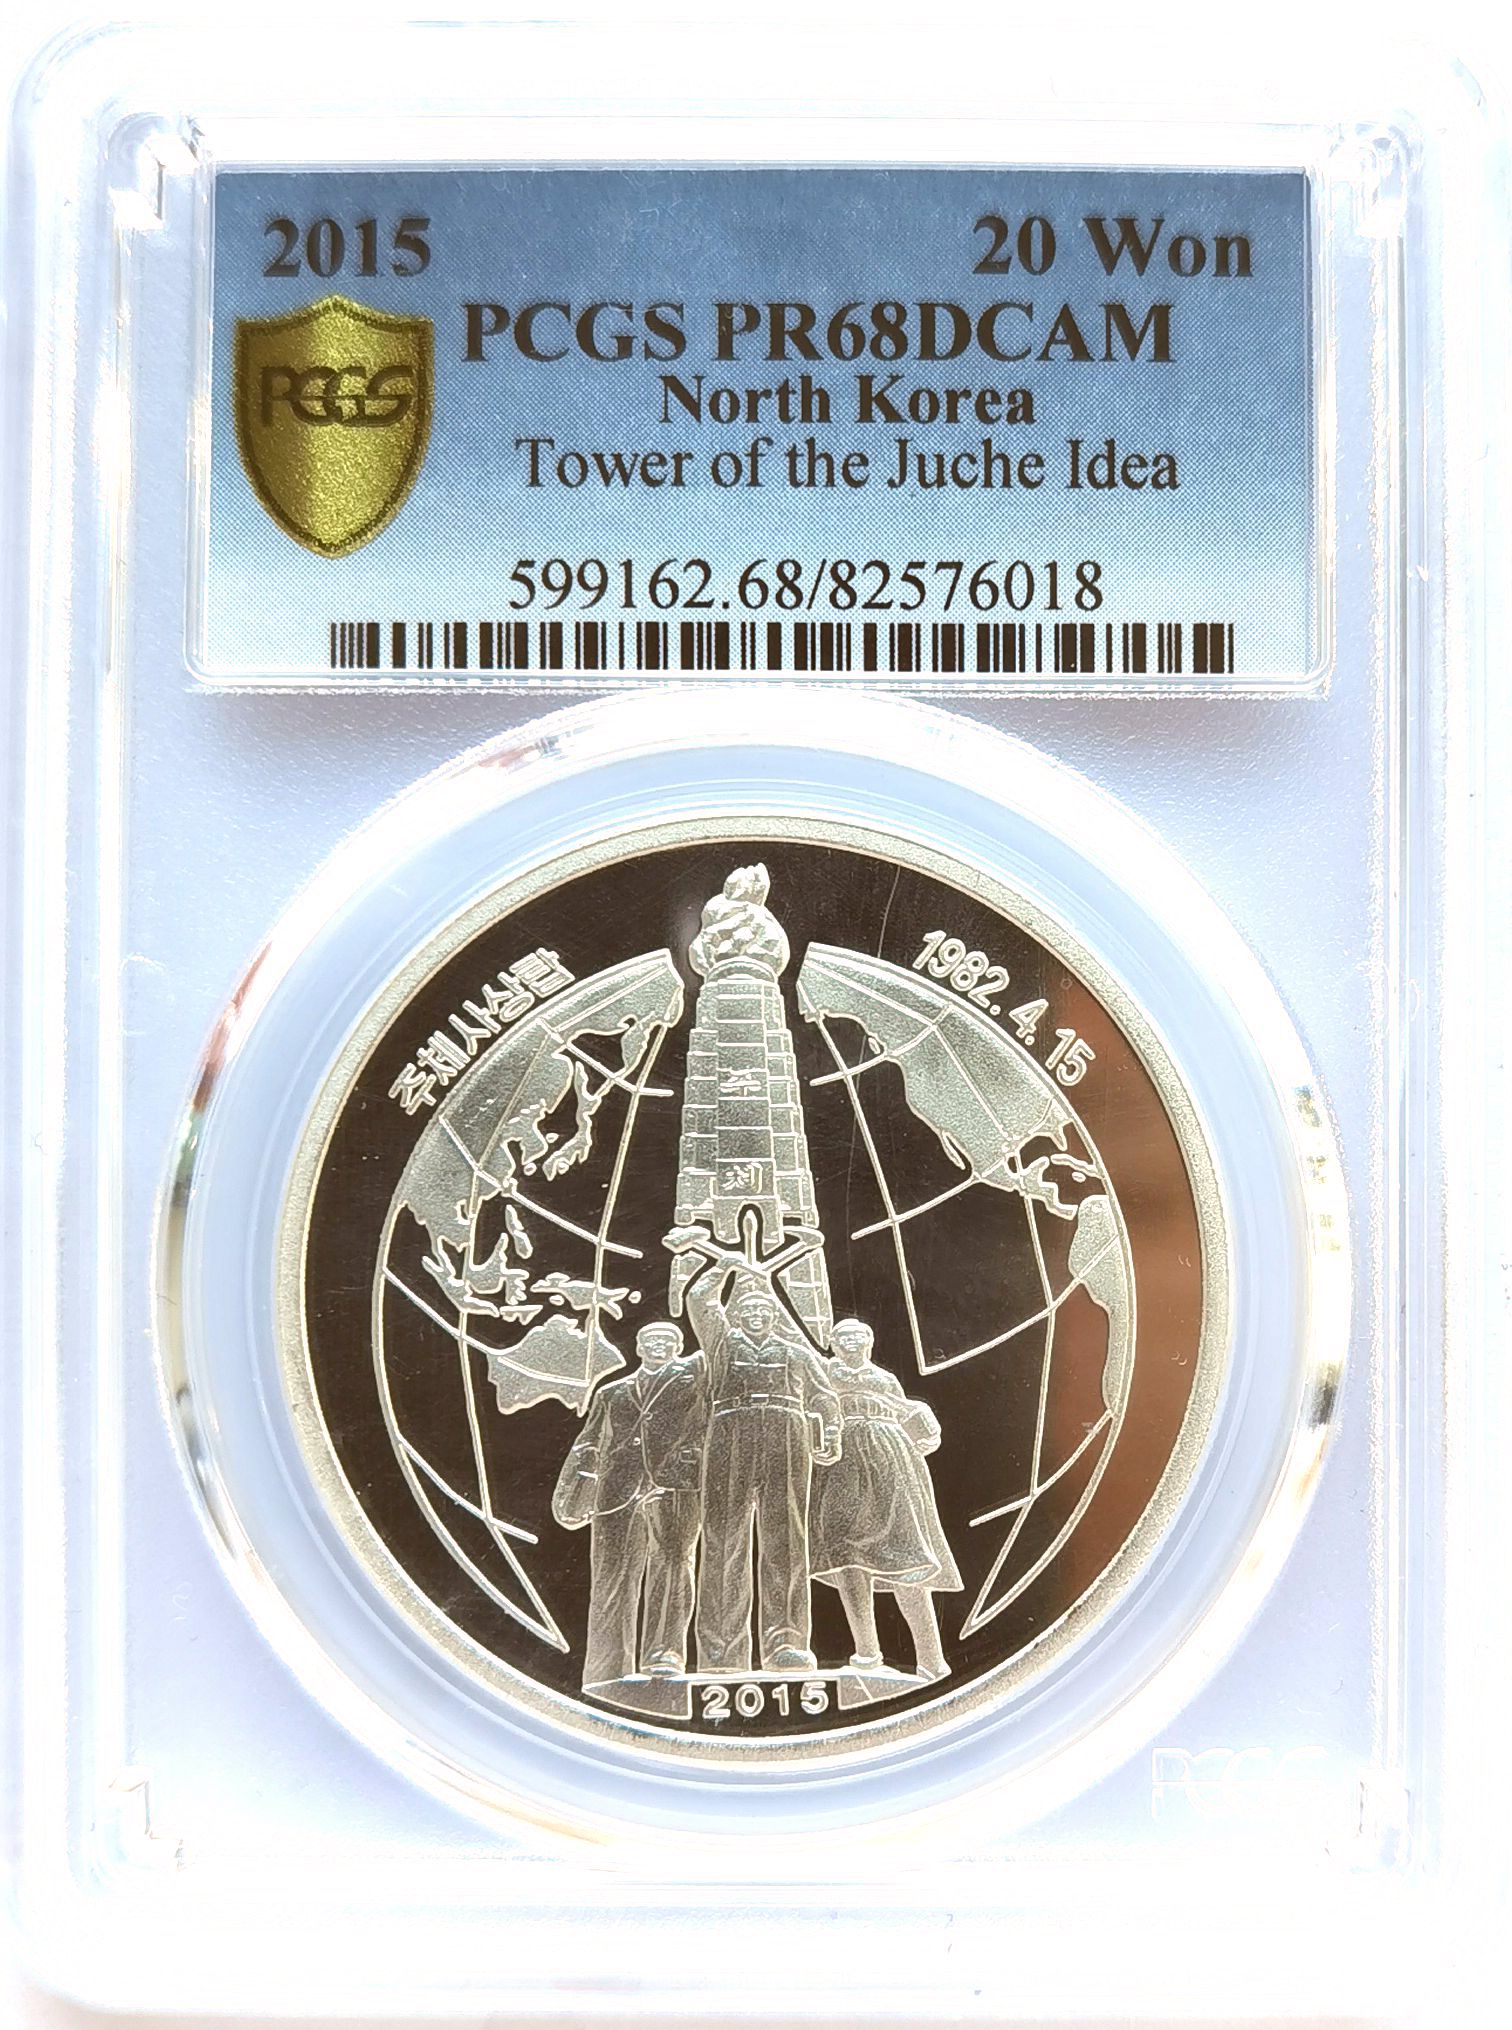 L3448, Korea "Monkey Year" Silver Coin 1 oz. 2016, PCGS PR68DCAM